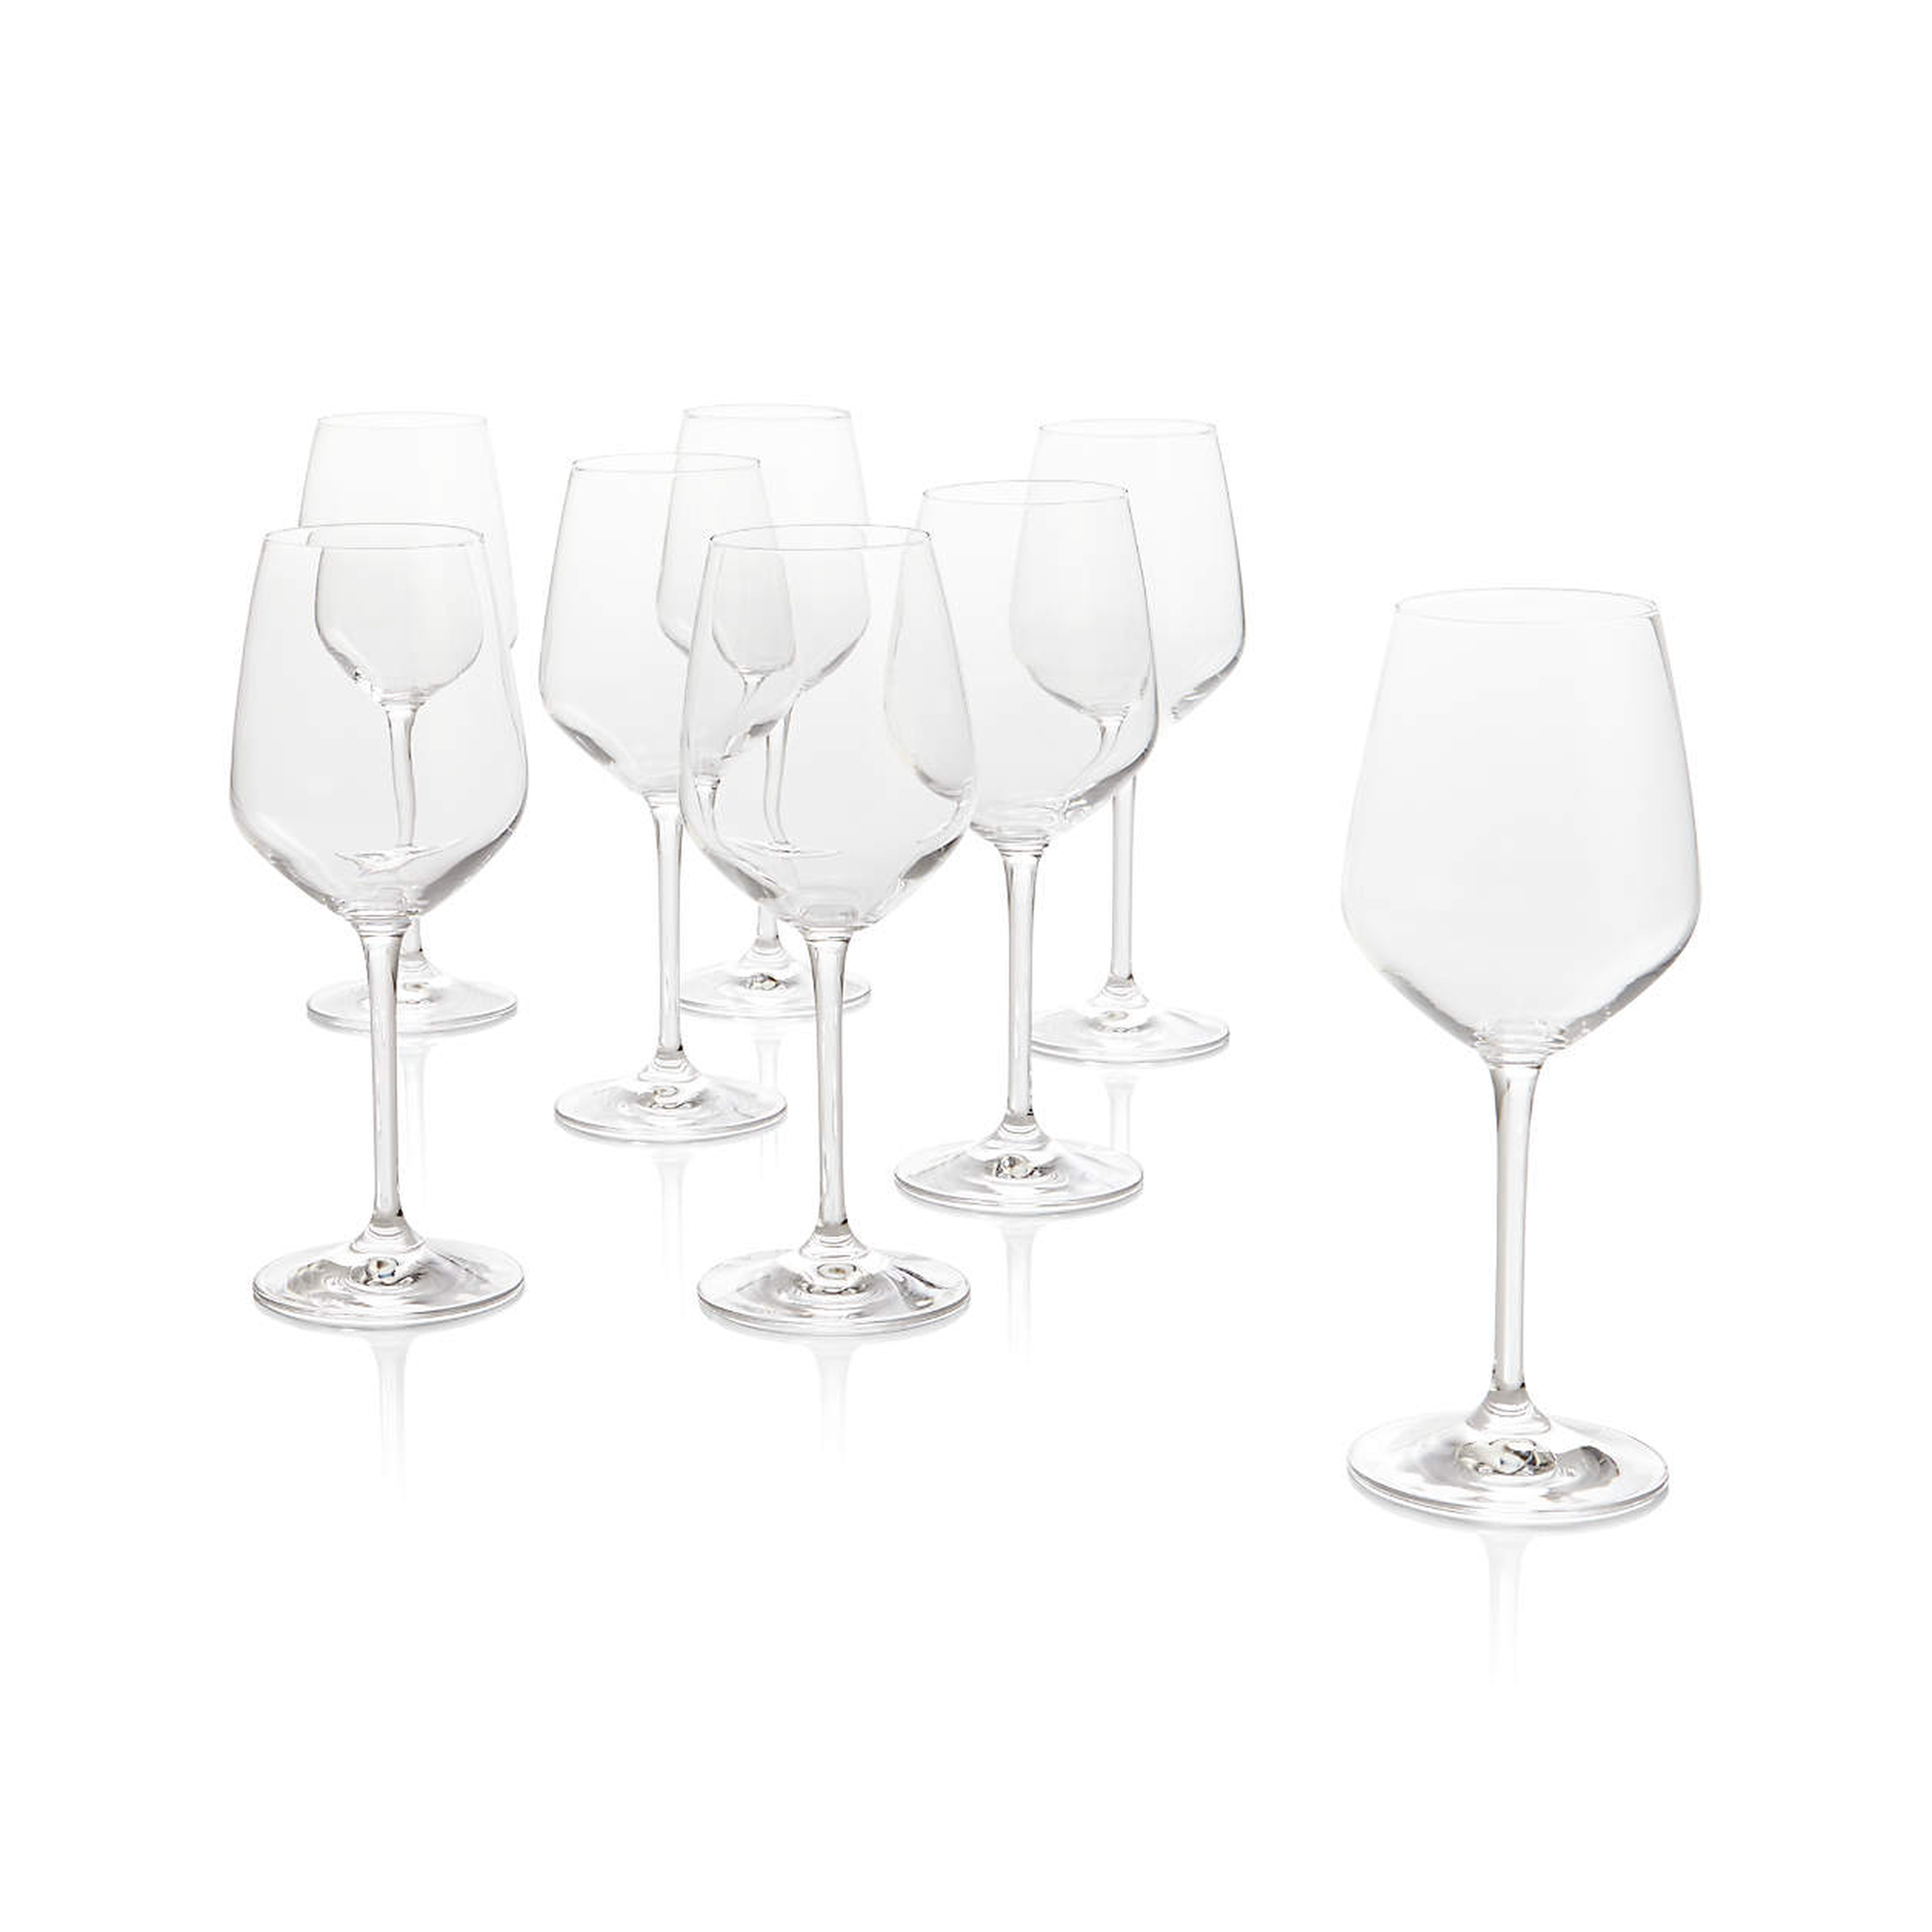 Nattie White Wine Glasses, Set of 8 - Crate and Barrel